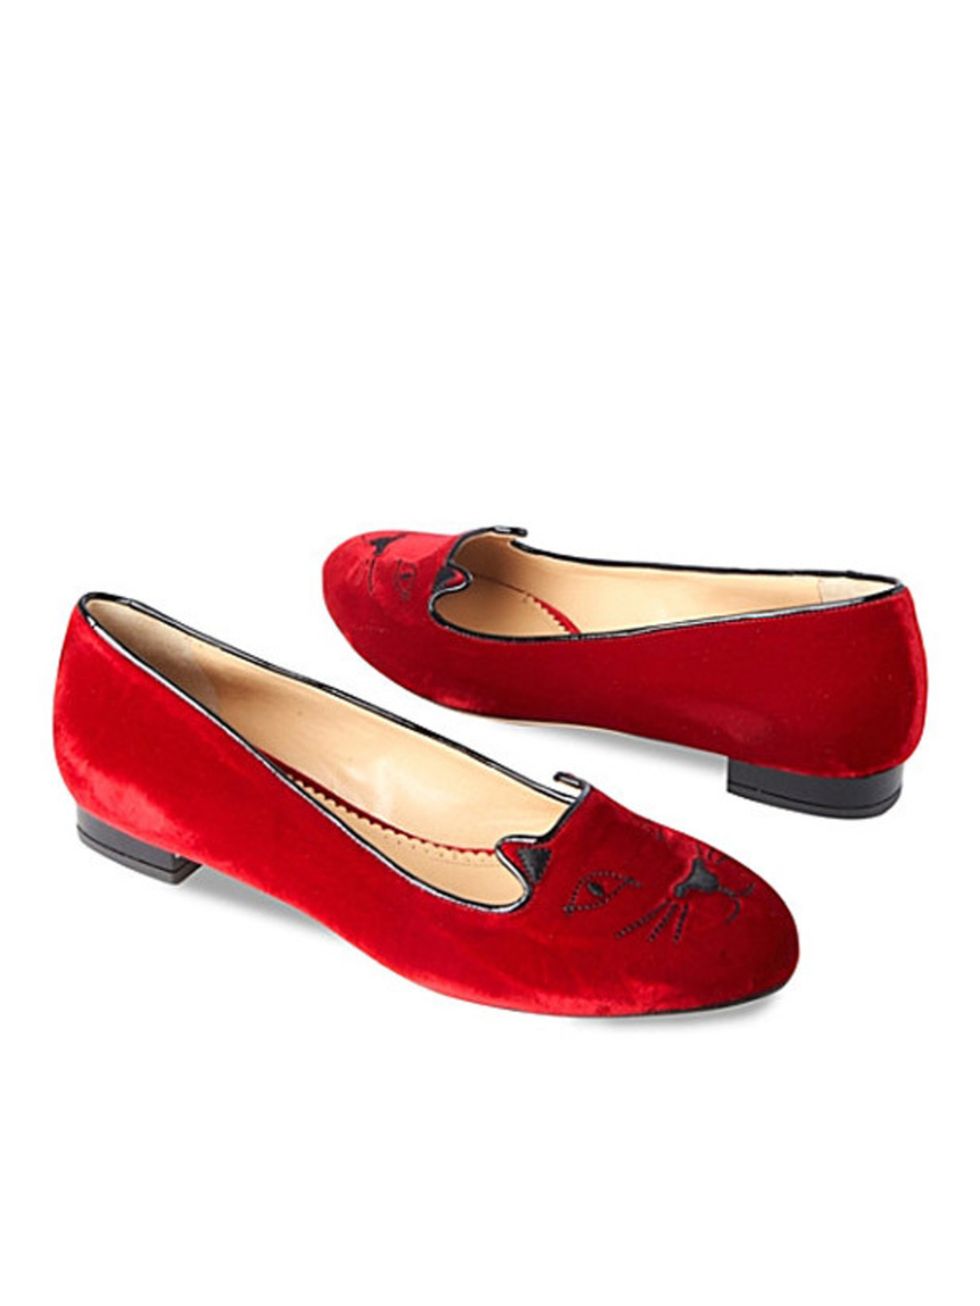 <p>Charlotte Olympia 'Kitty' smoking slippers, £485, at <a href="http://www.selfridges.com/">Selfridges</a> </p>